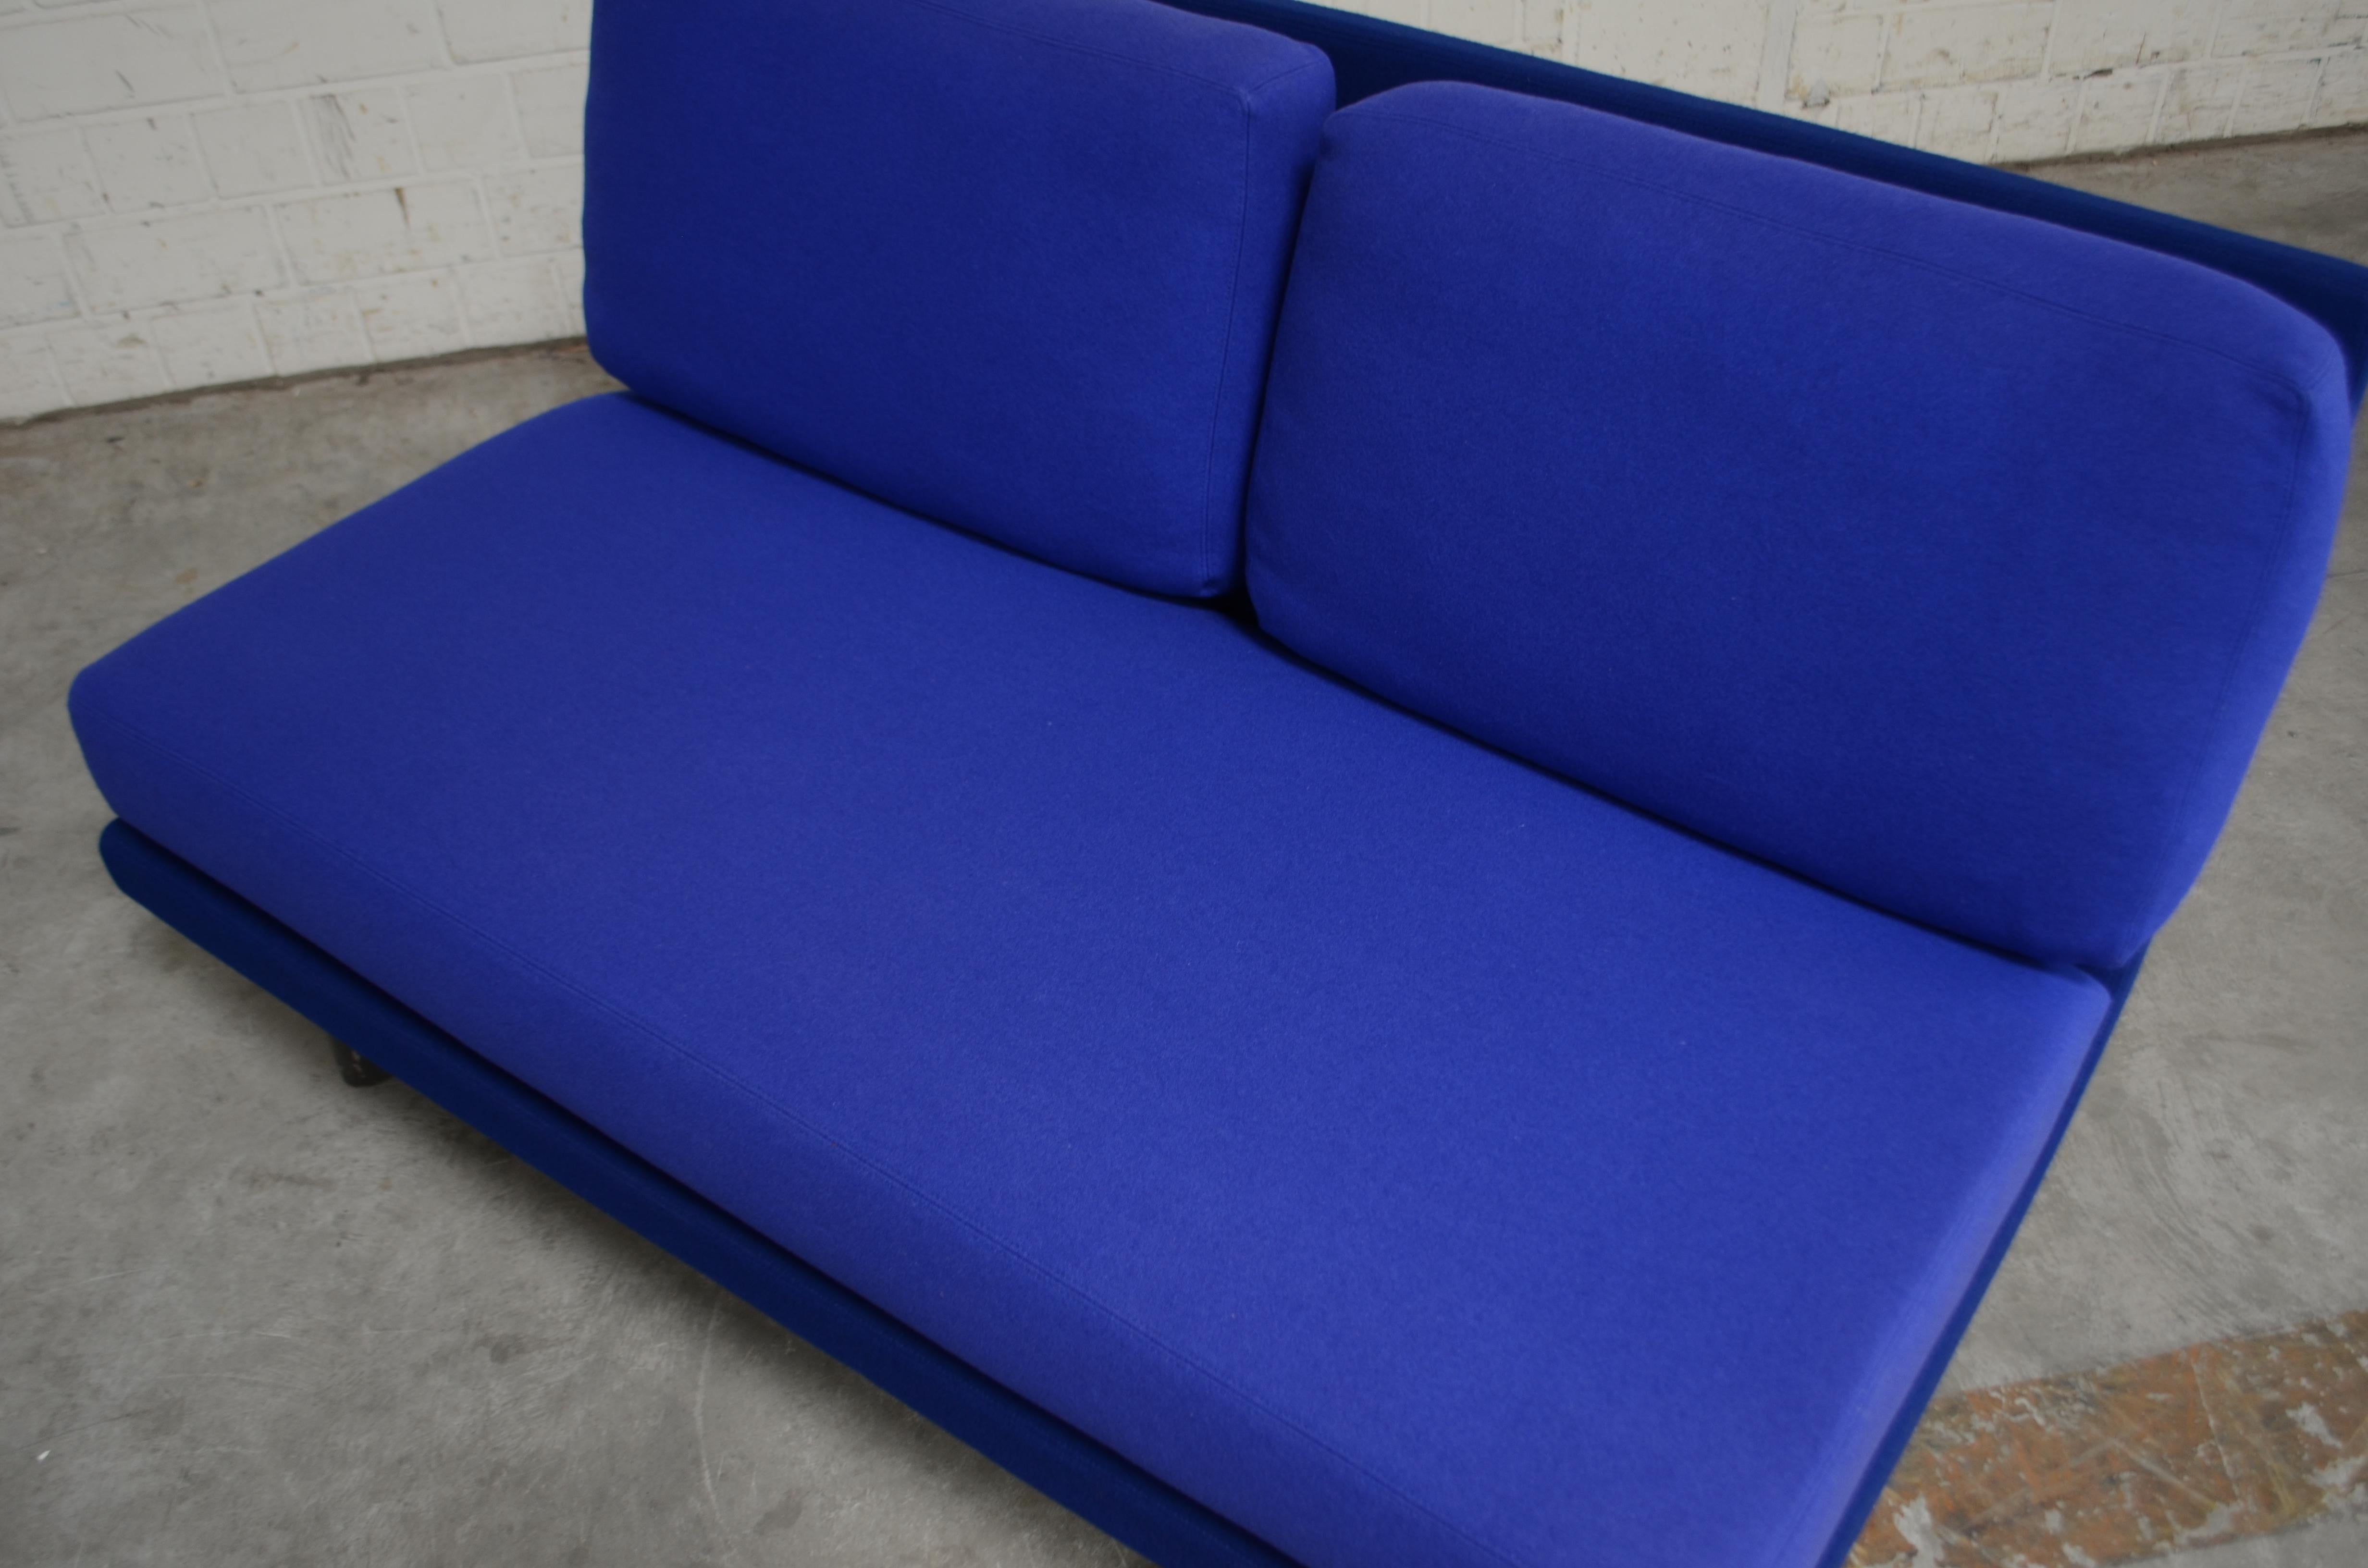 Steel Rare Prototype Sofa Design by David Chipperfield for Interlübke